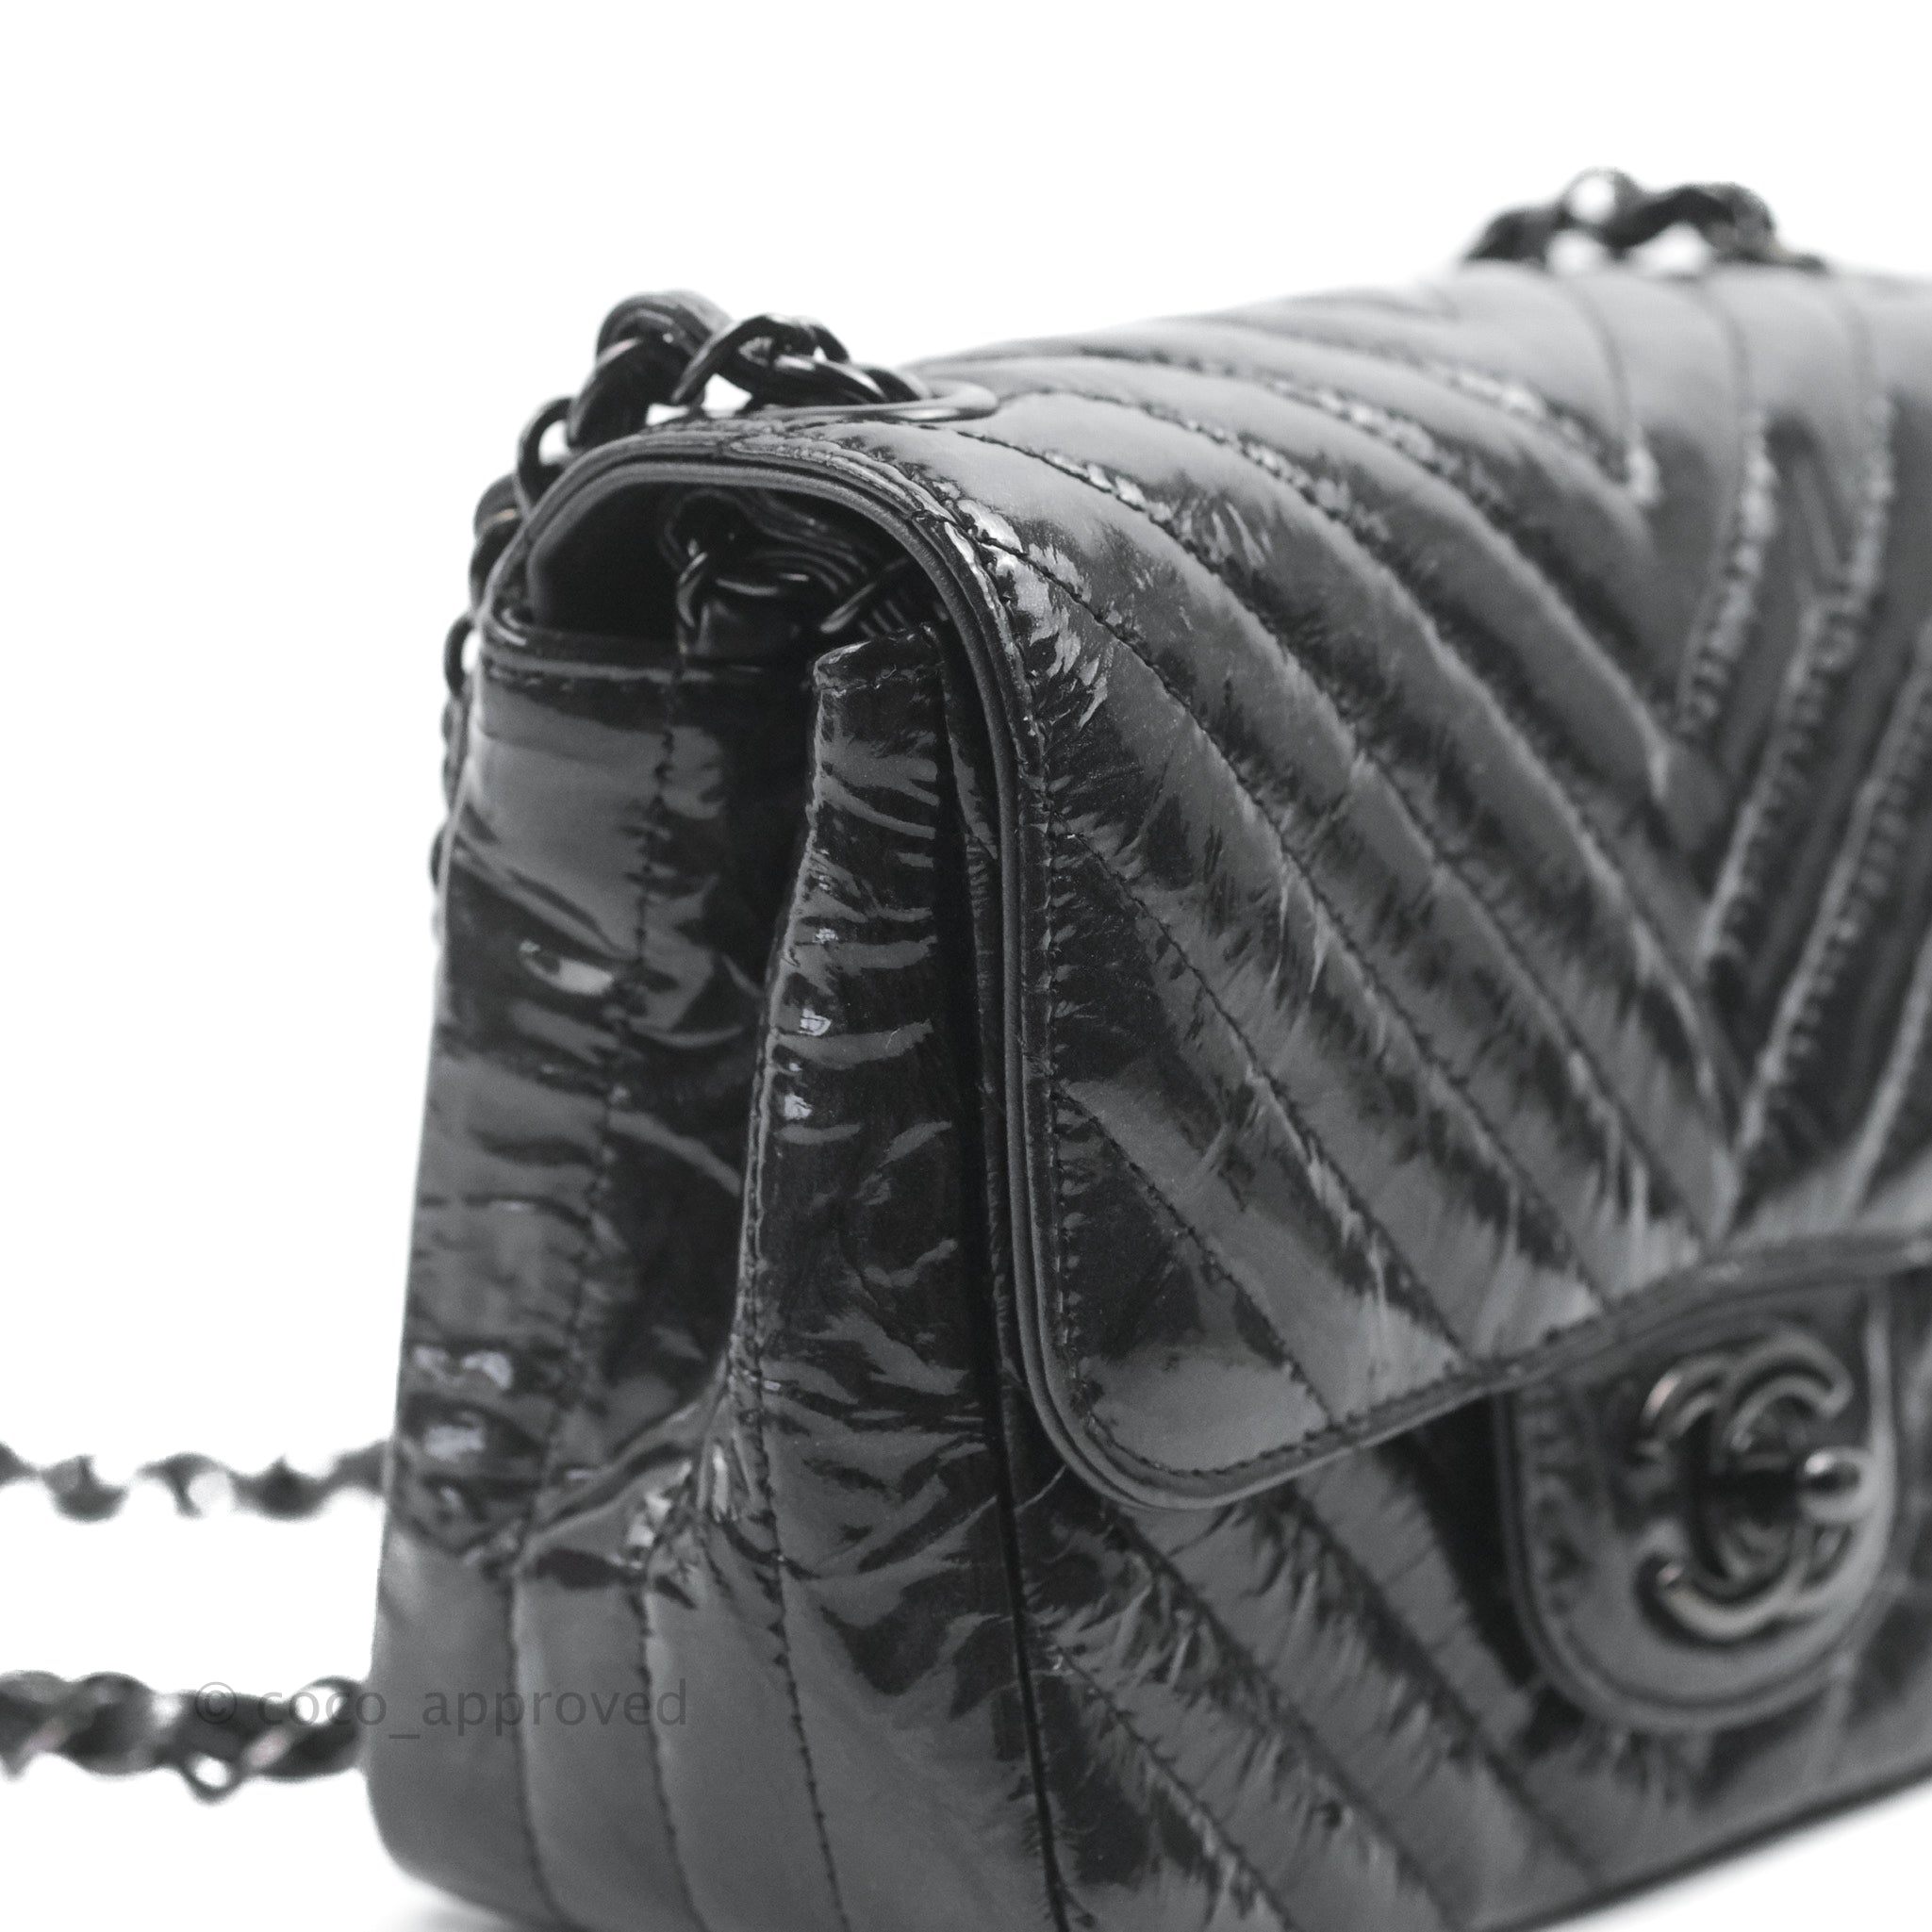 CHANEL Bag Review  classic mini rectangular flap black patent leather 